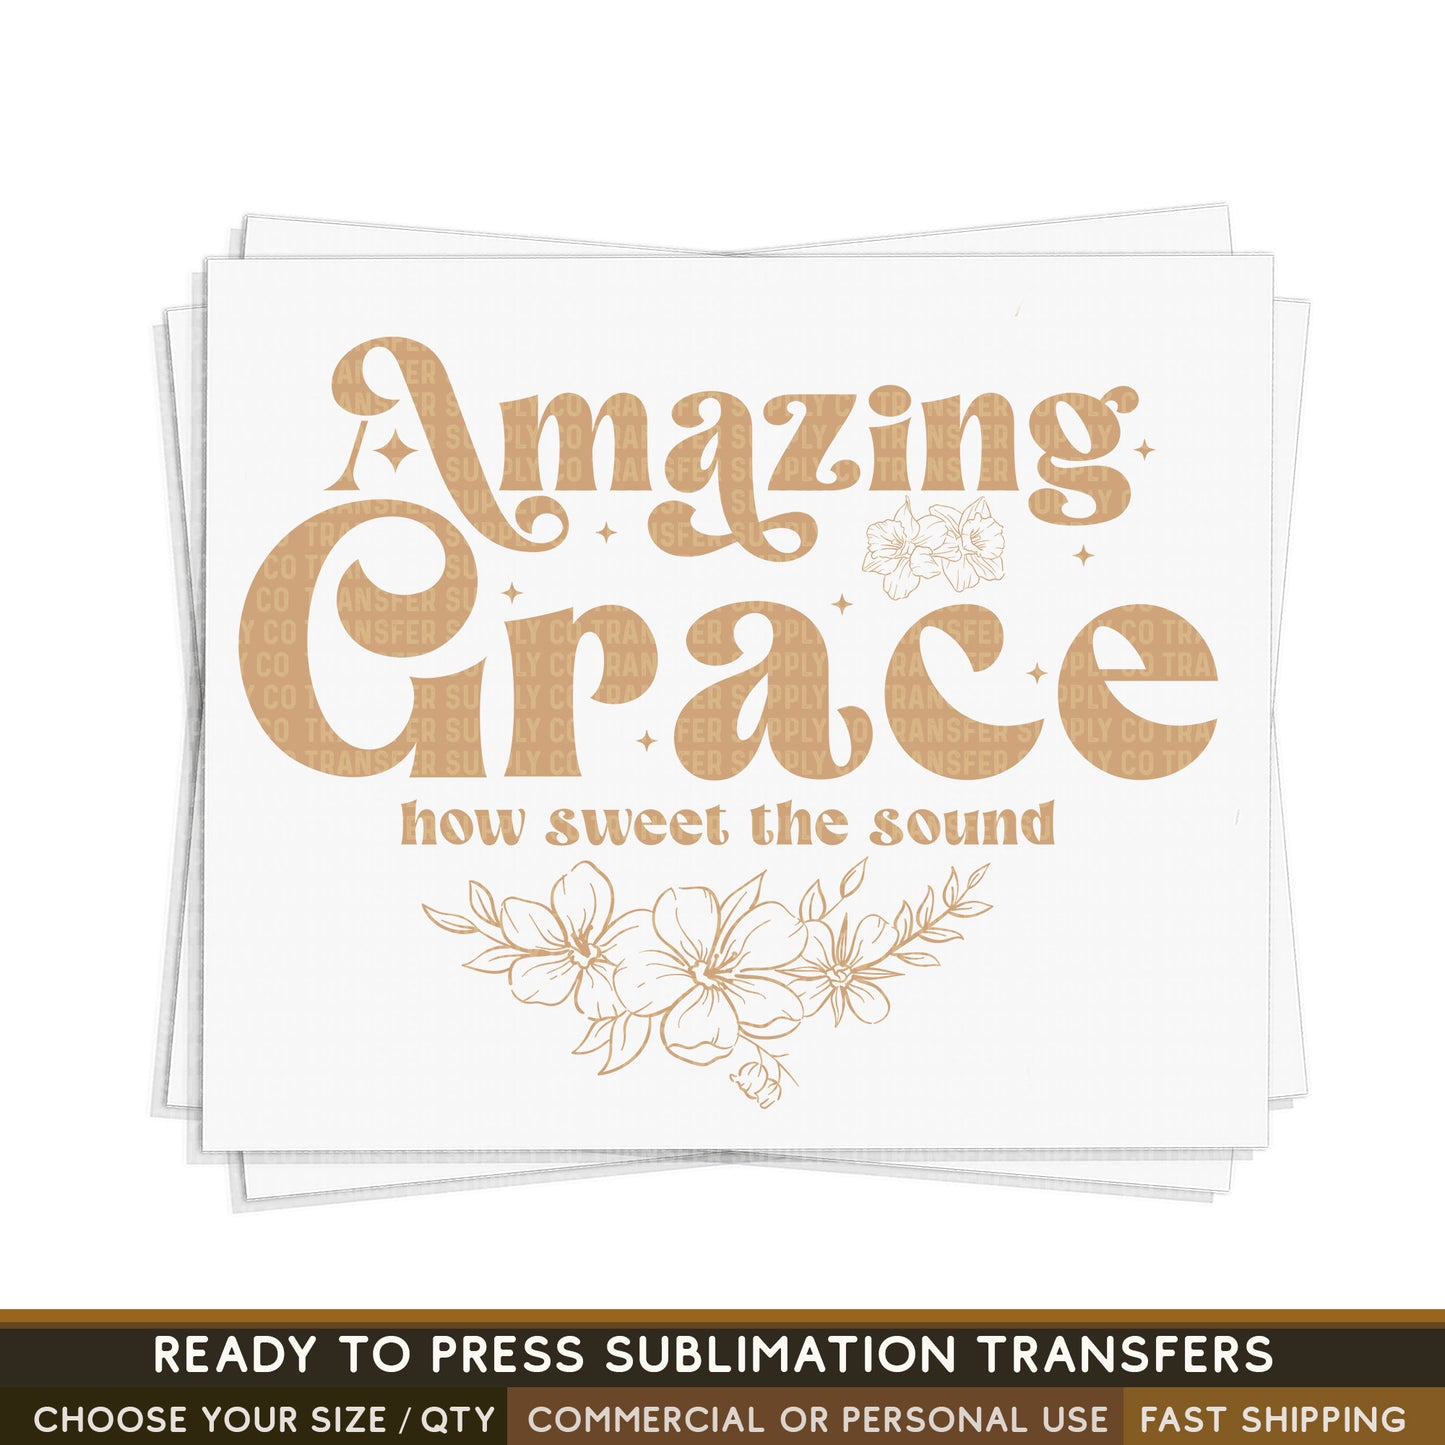 Amazing Grace, Religious Ready To Press Sublimation Transfer, Ready To Press Sublimation Prints, Sublimation Transfer